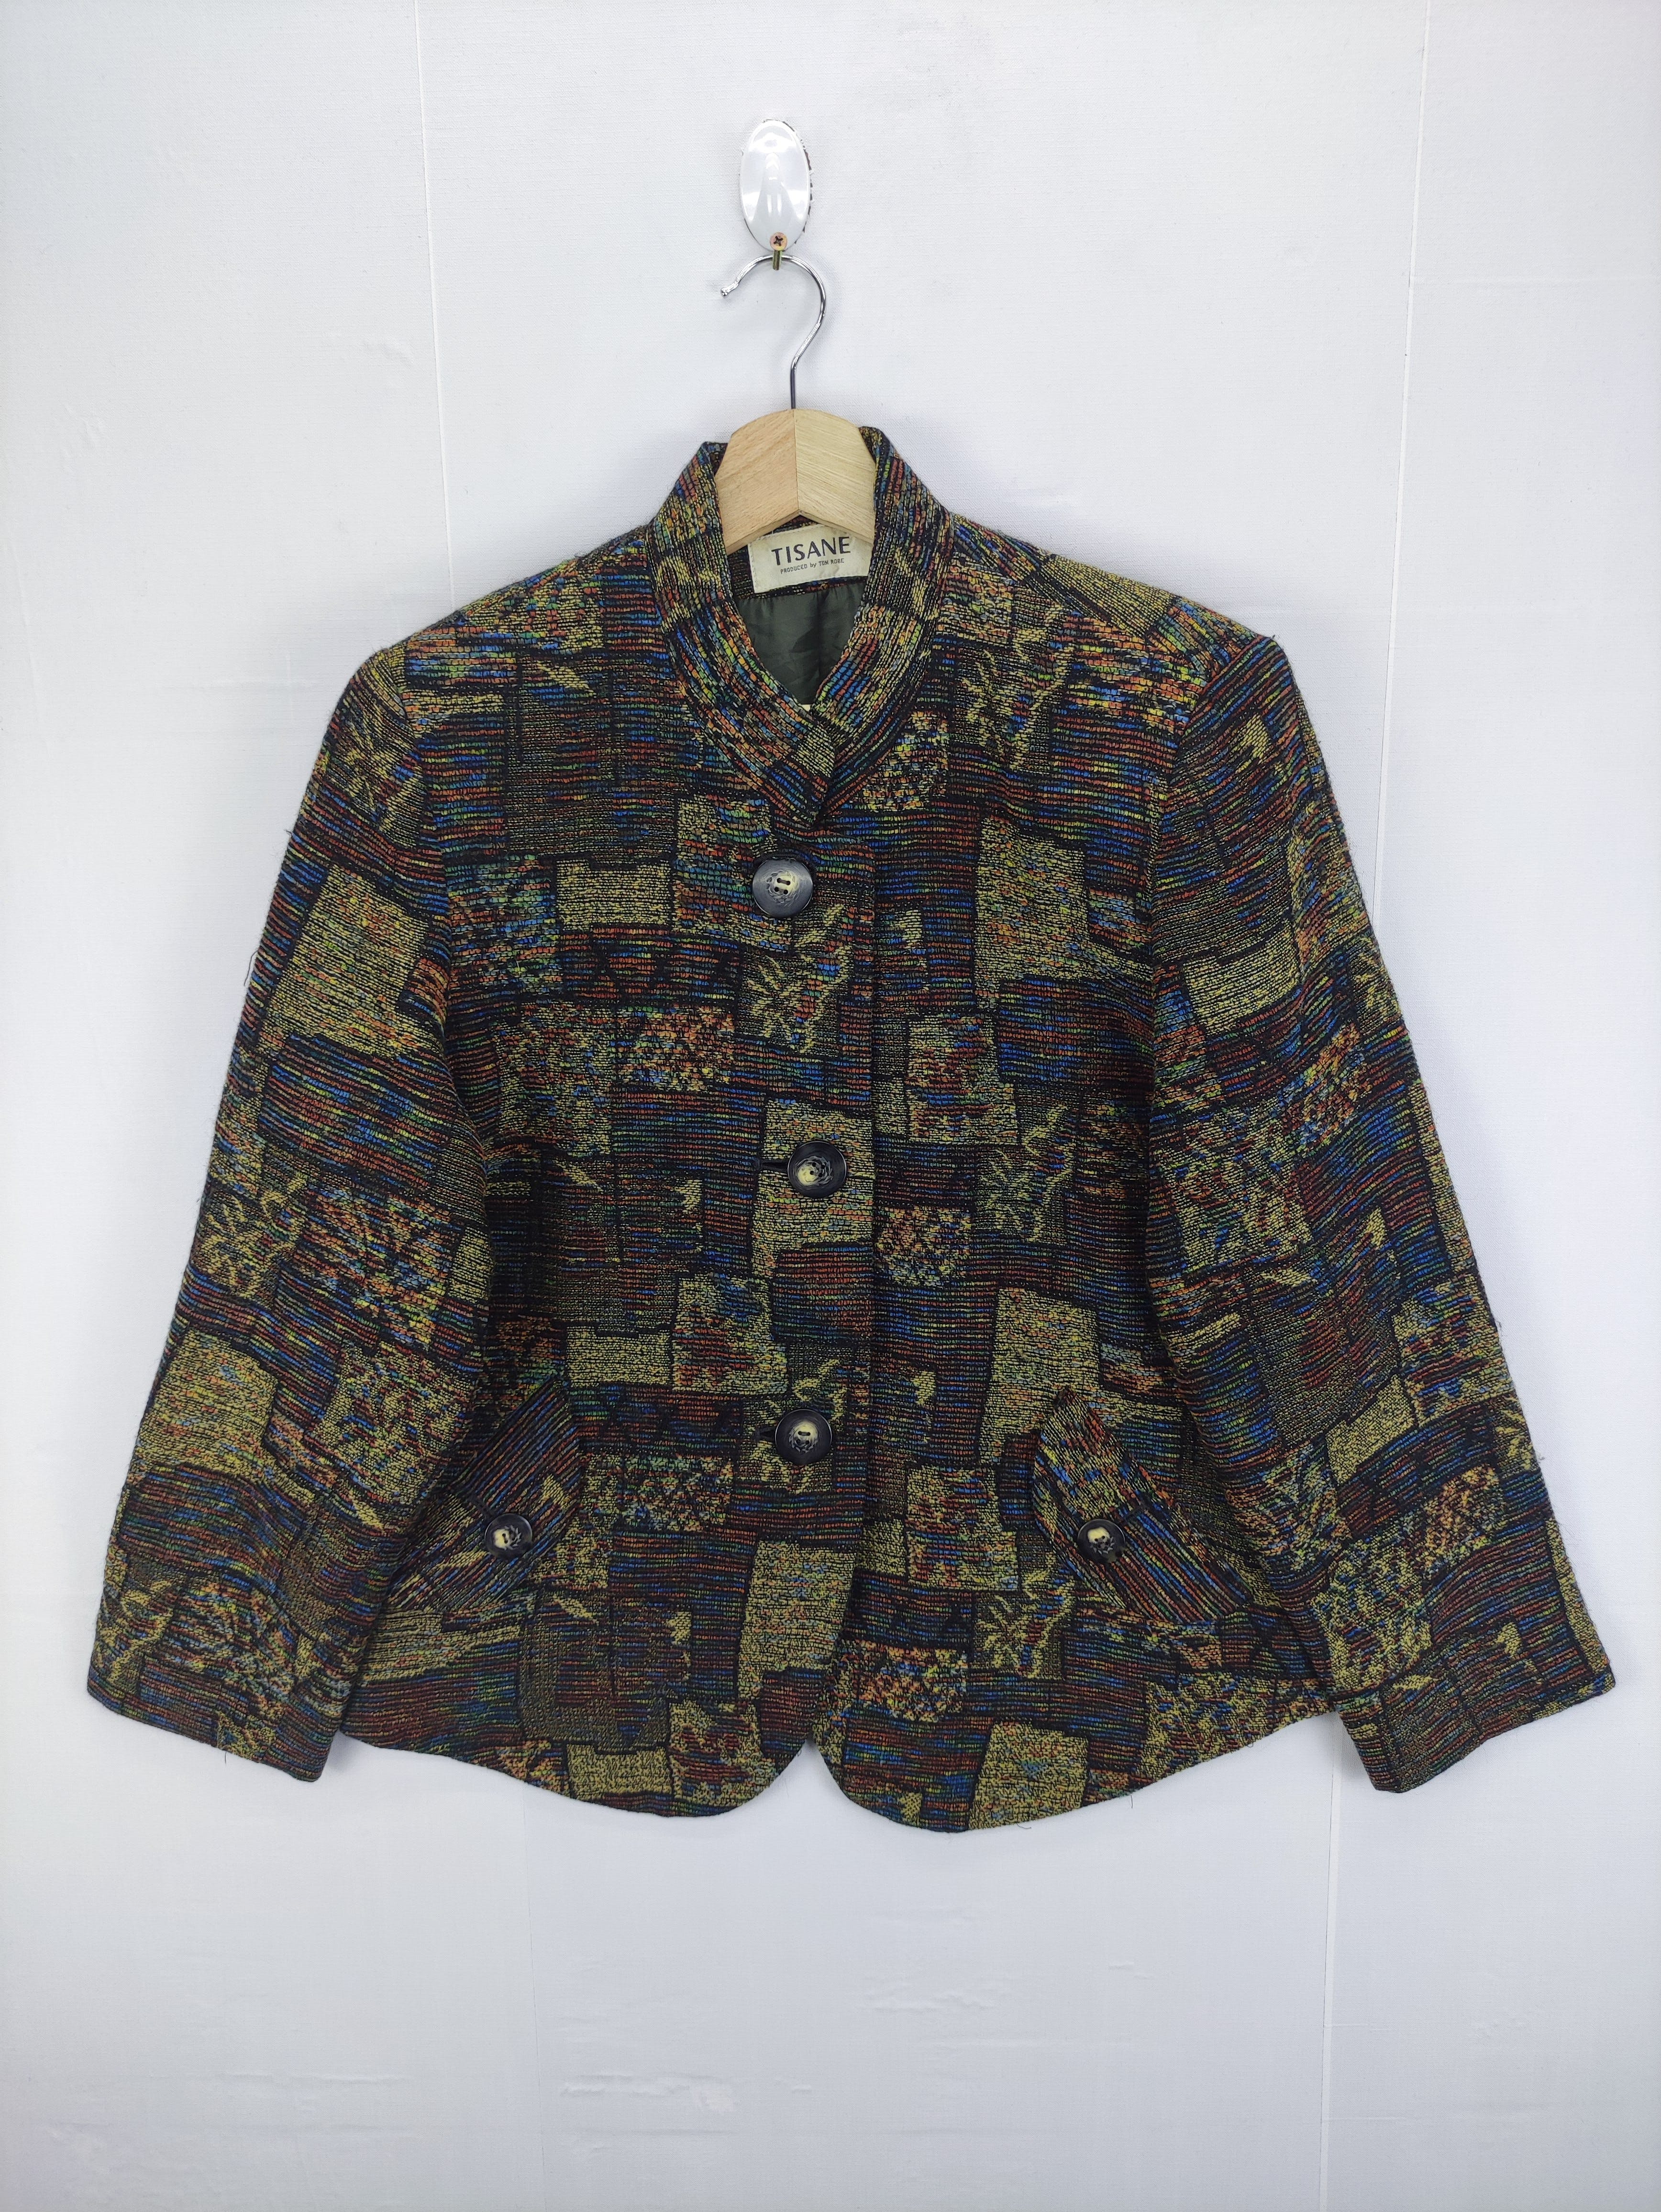 Vintage Jaket Coat Tisane Button Up - 1